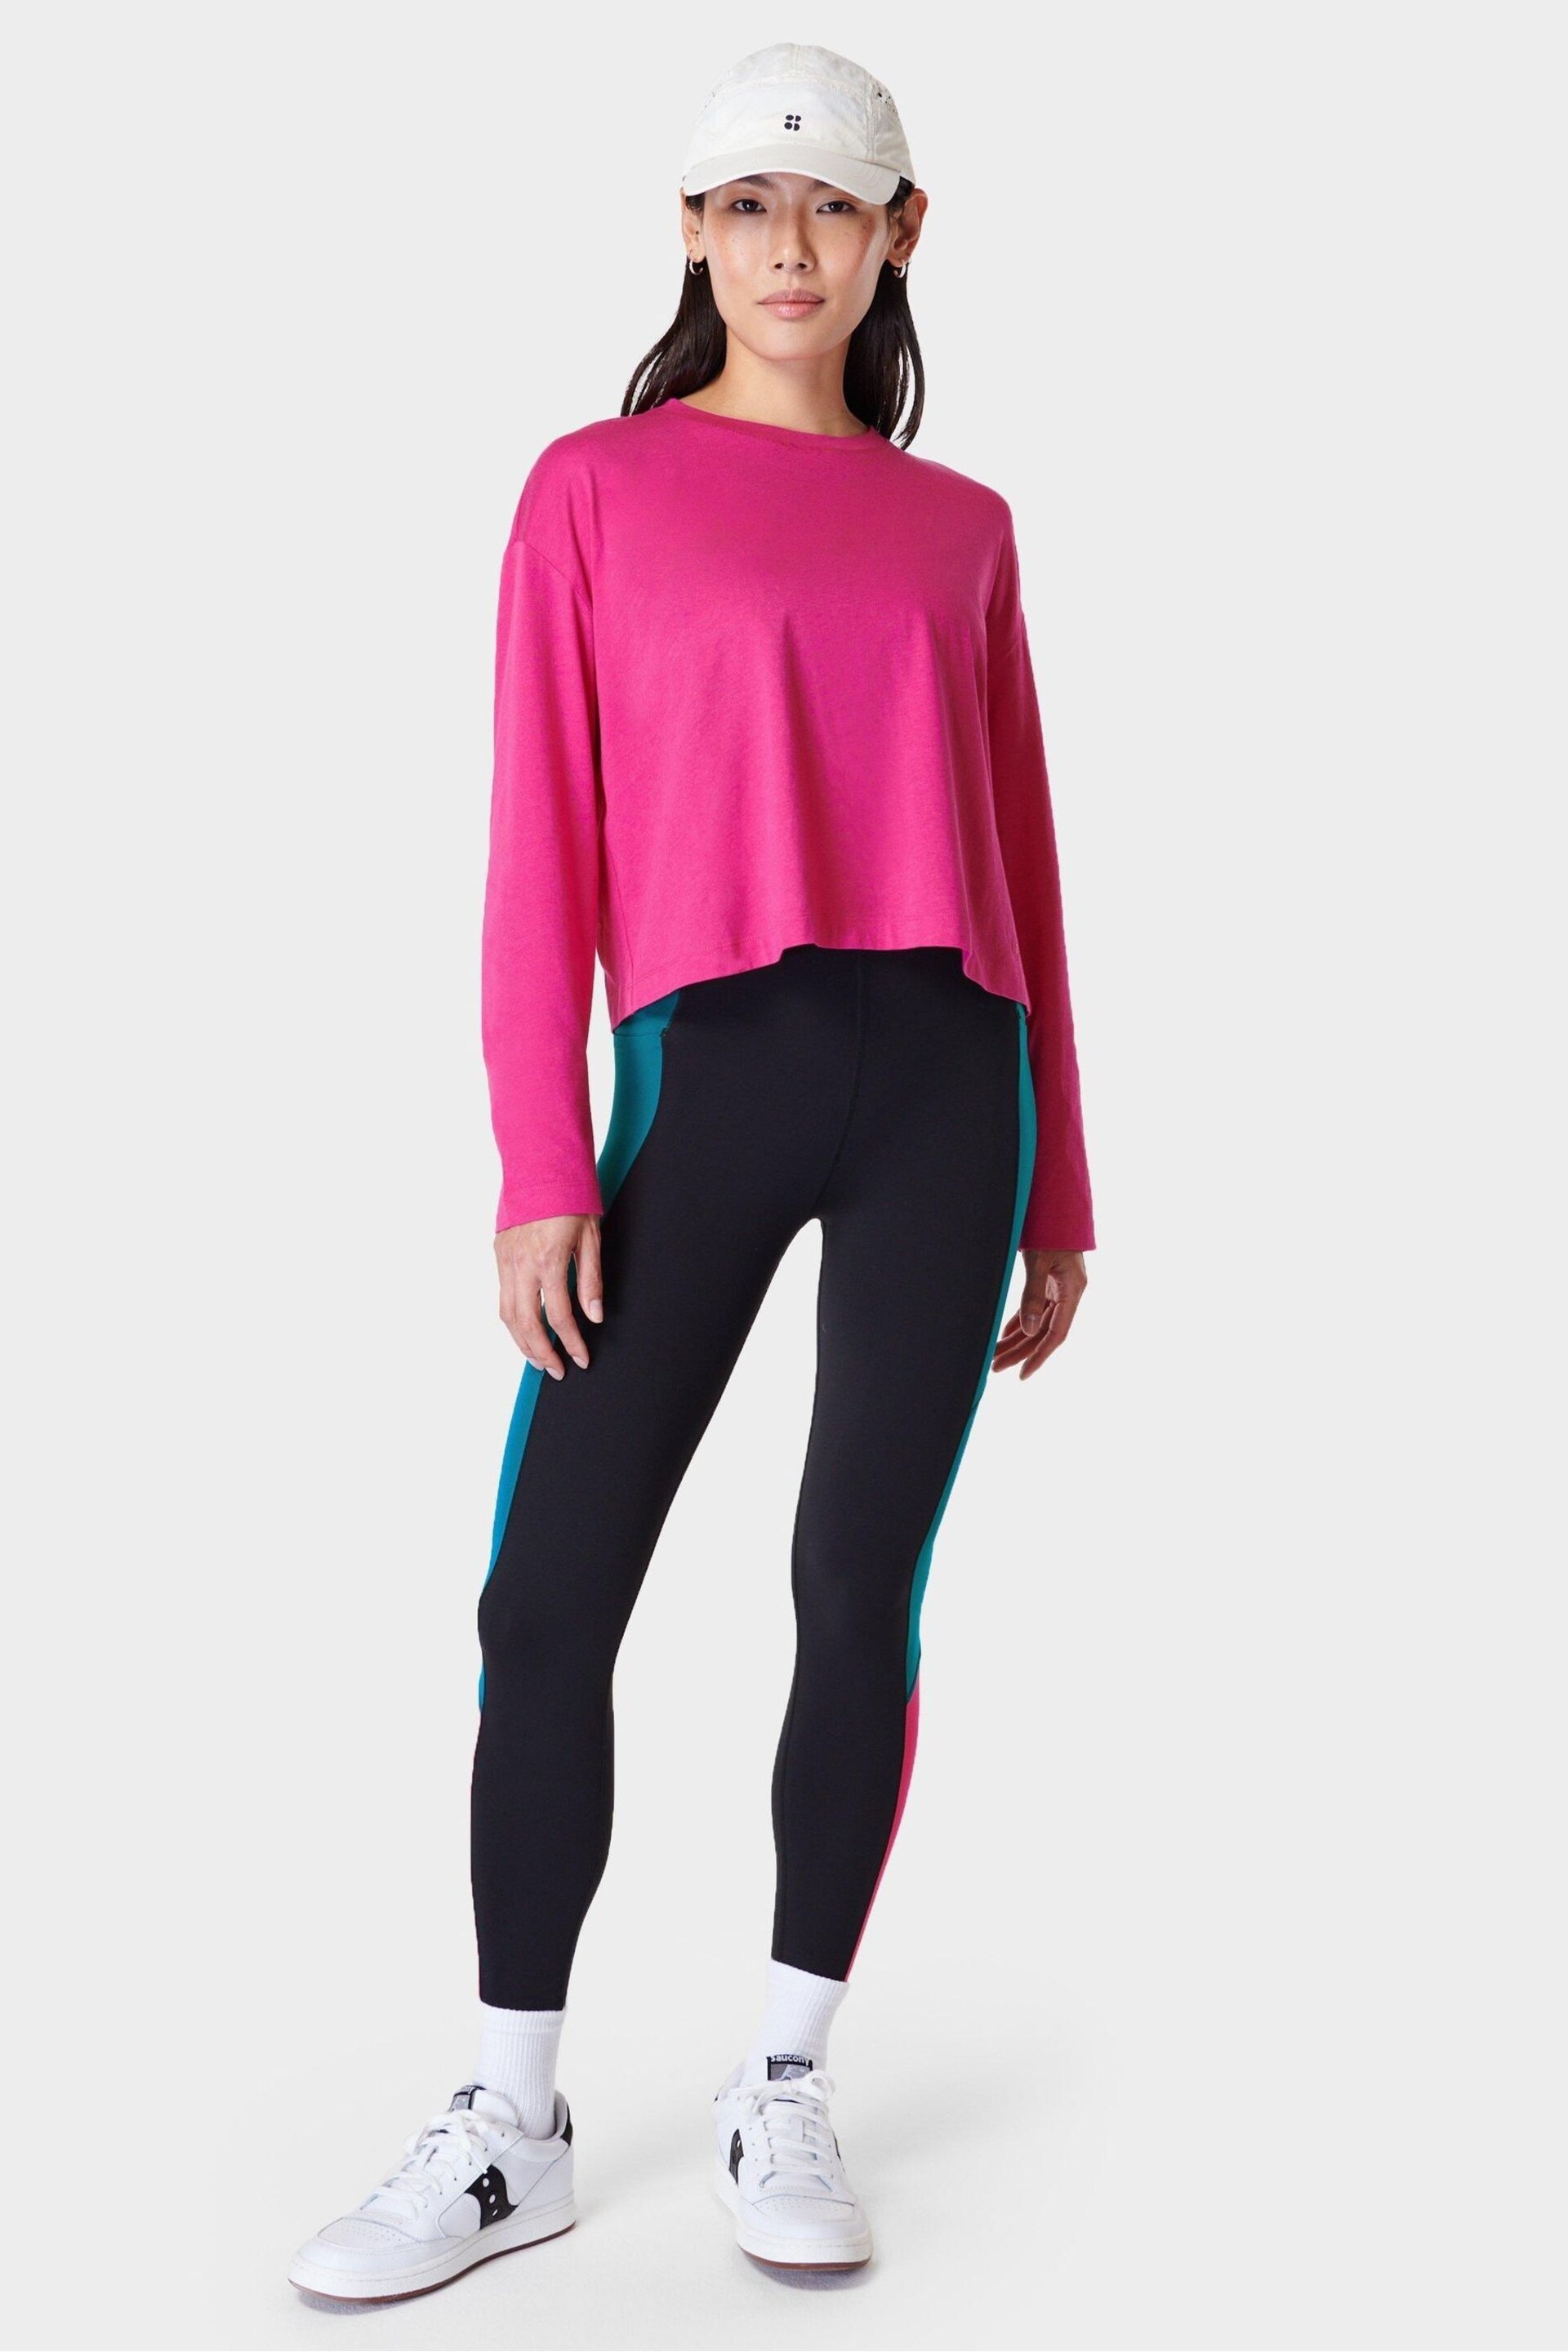 Sweaty Betty Beet Pink Essential Crop Long Sleeve T-Shirt - Image 4 of 7